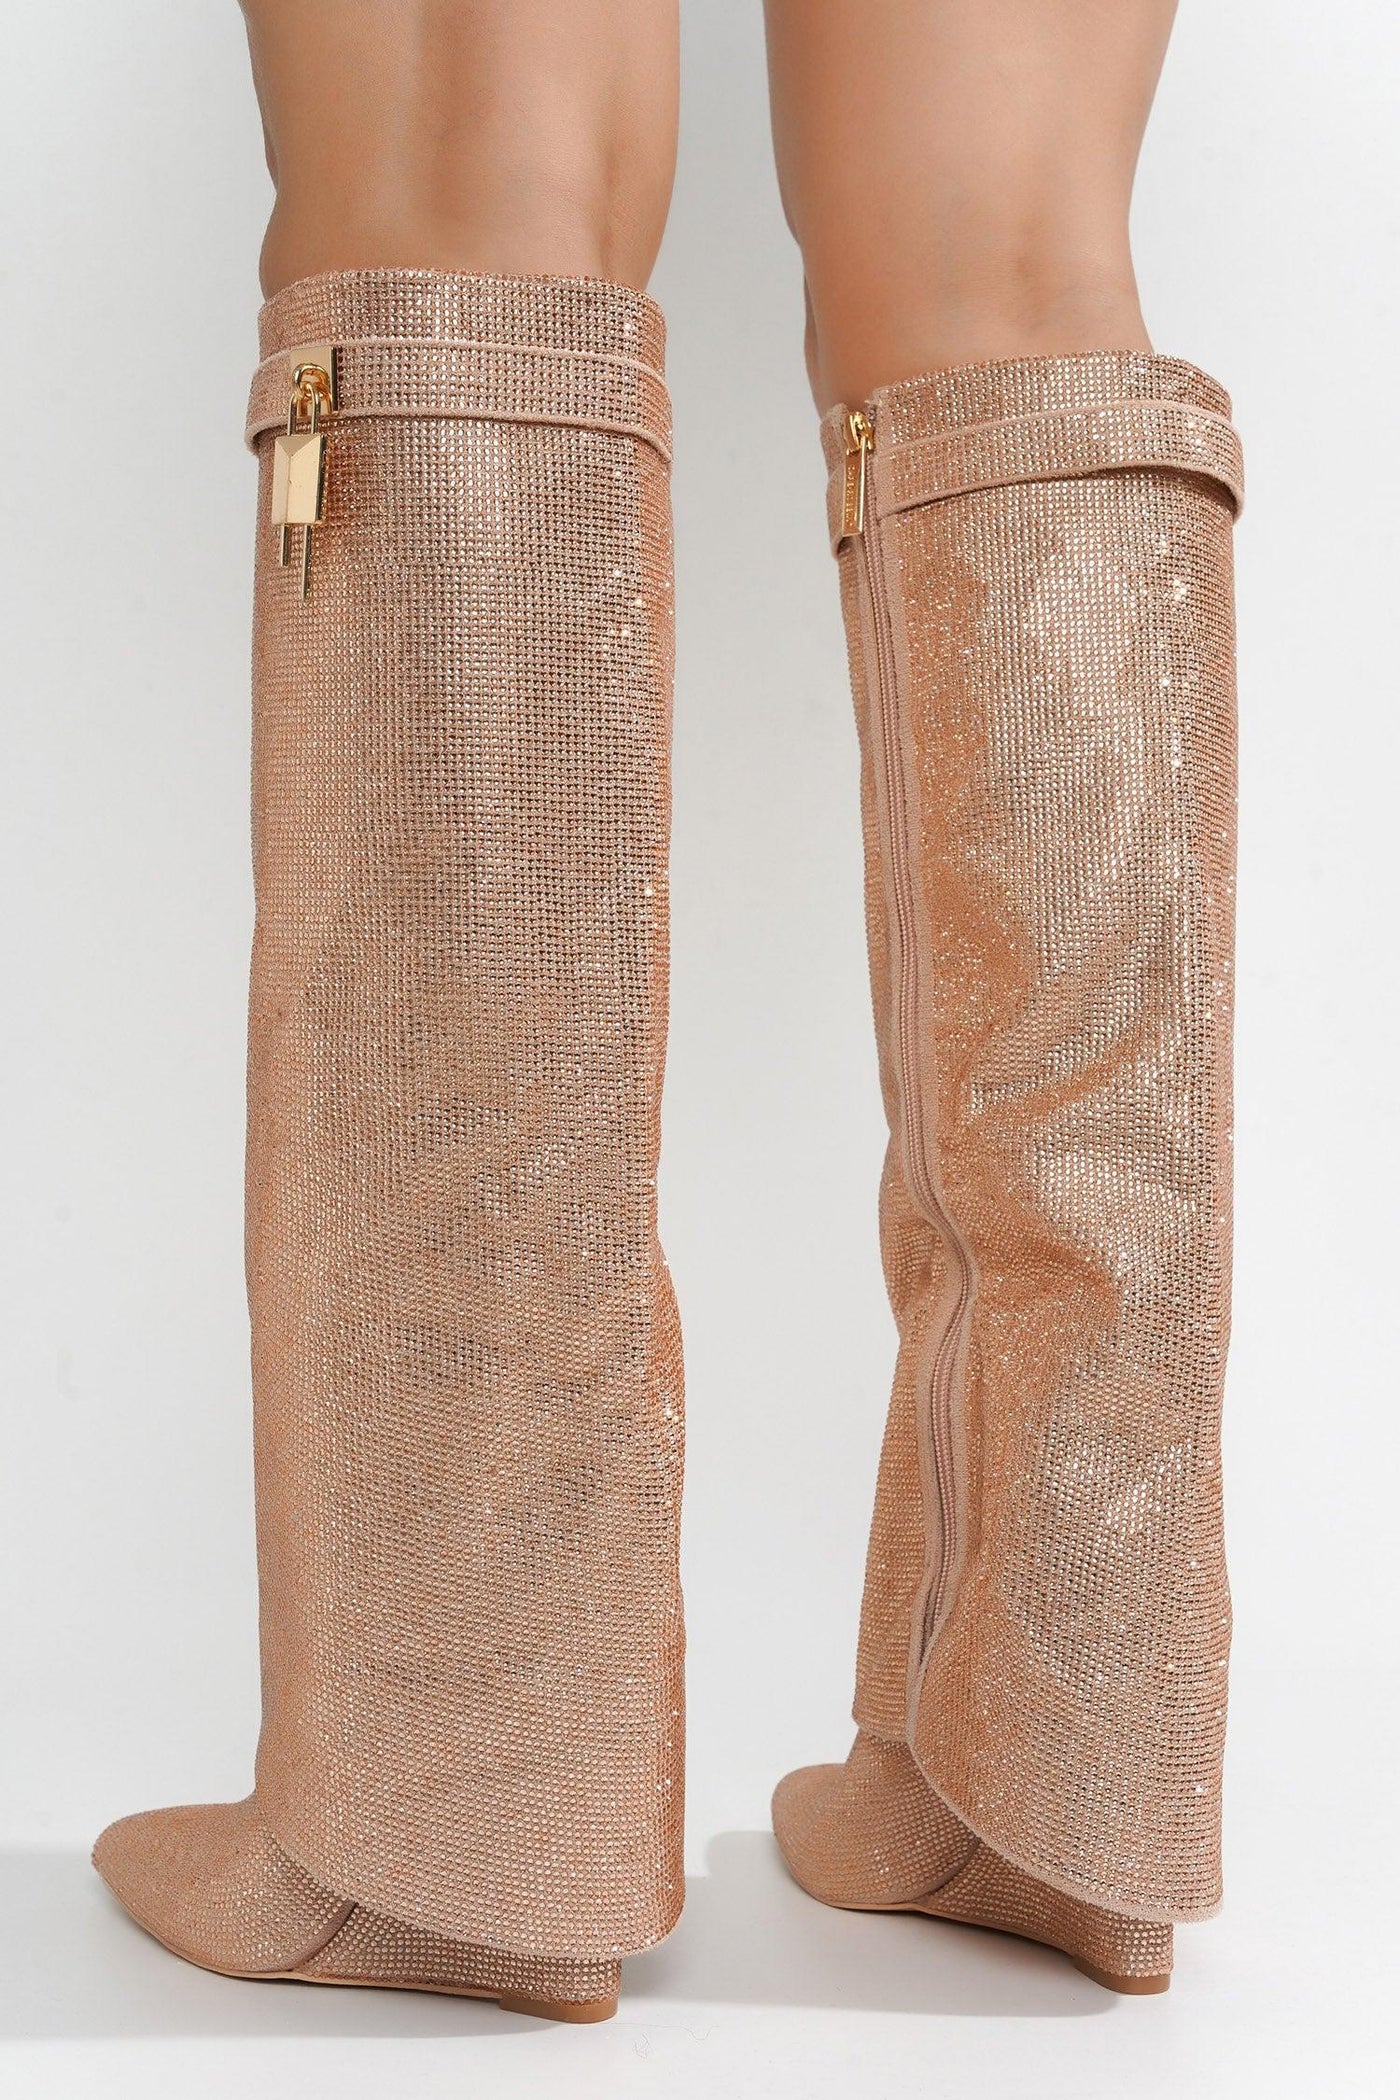 CRARA - ROSE GOLD Thigh High Boots - AMIClubwear